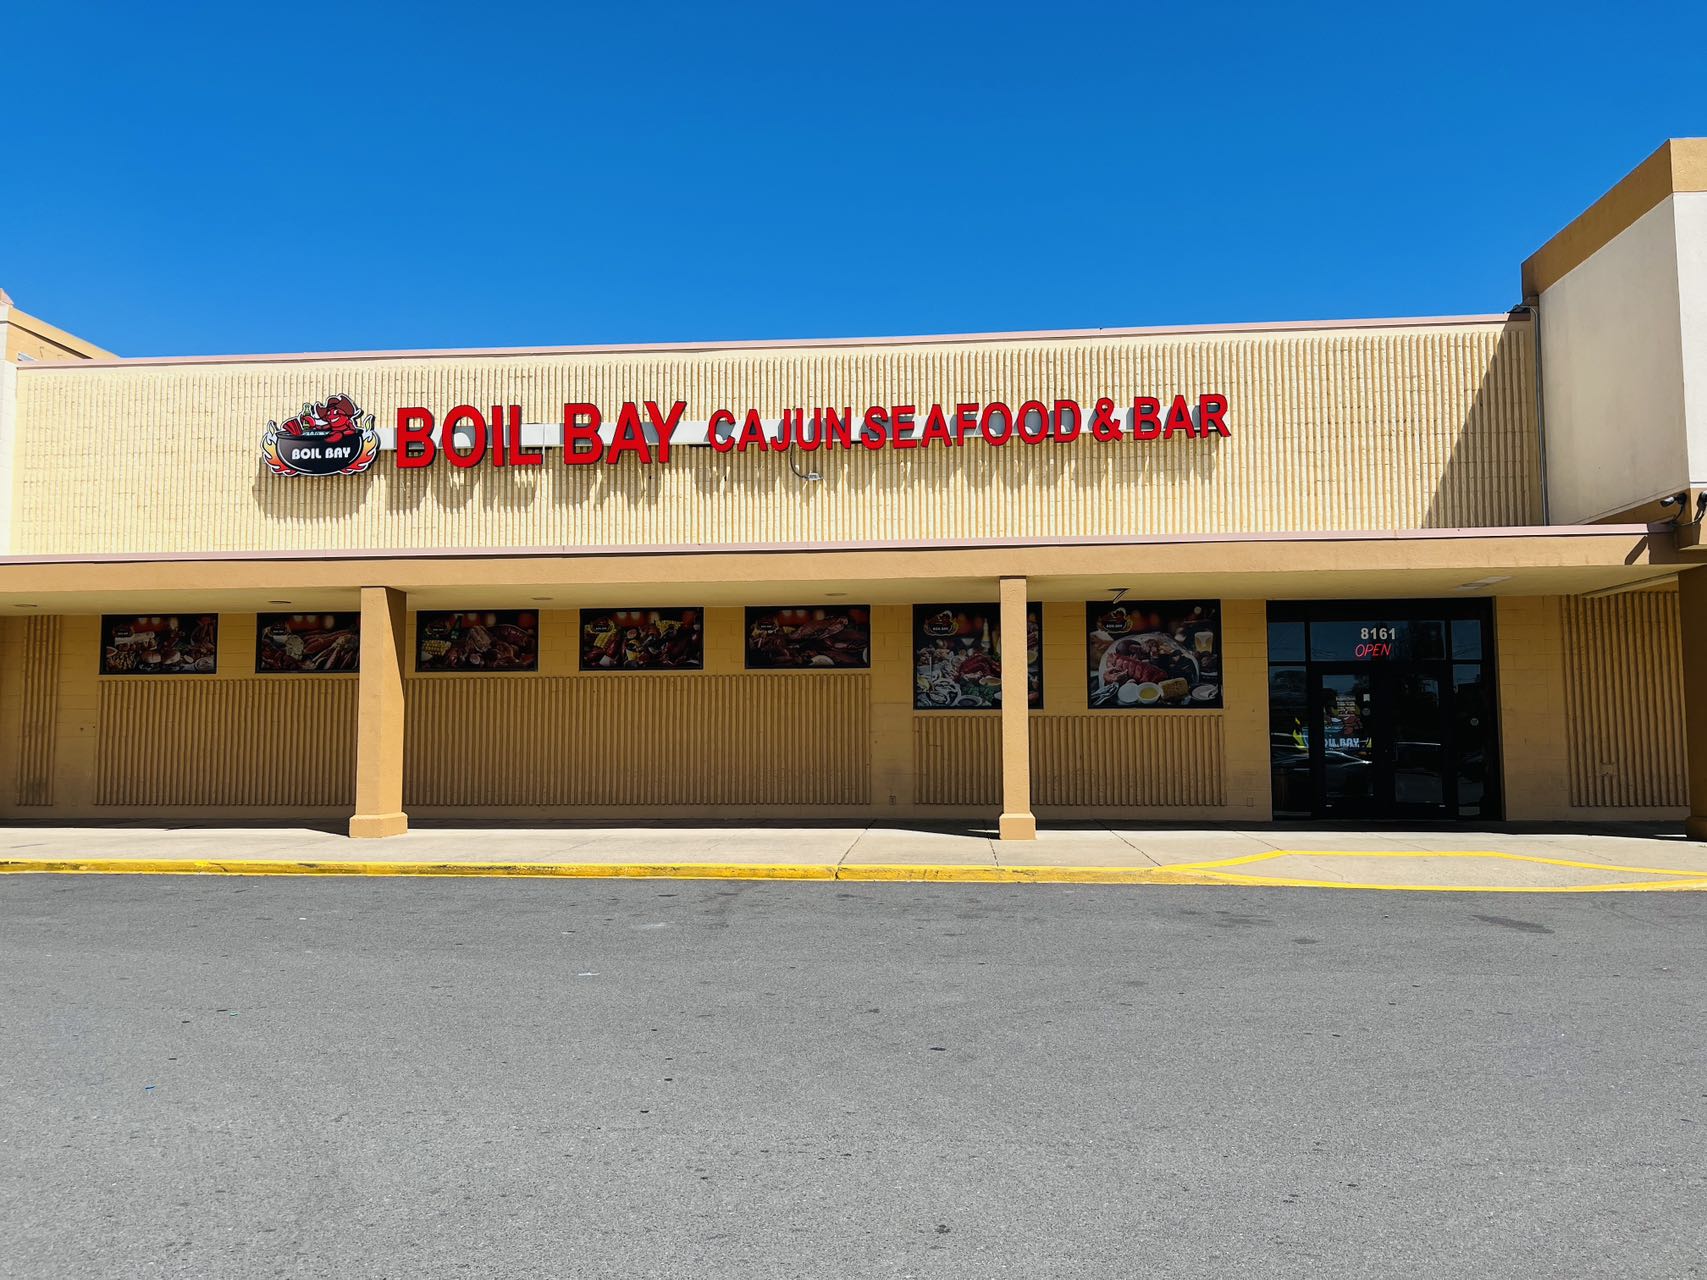 Boil Bay Cajun Seafood and Bar